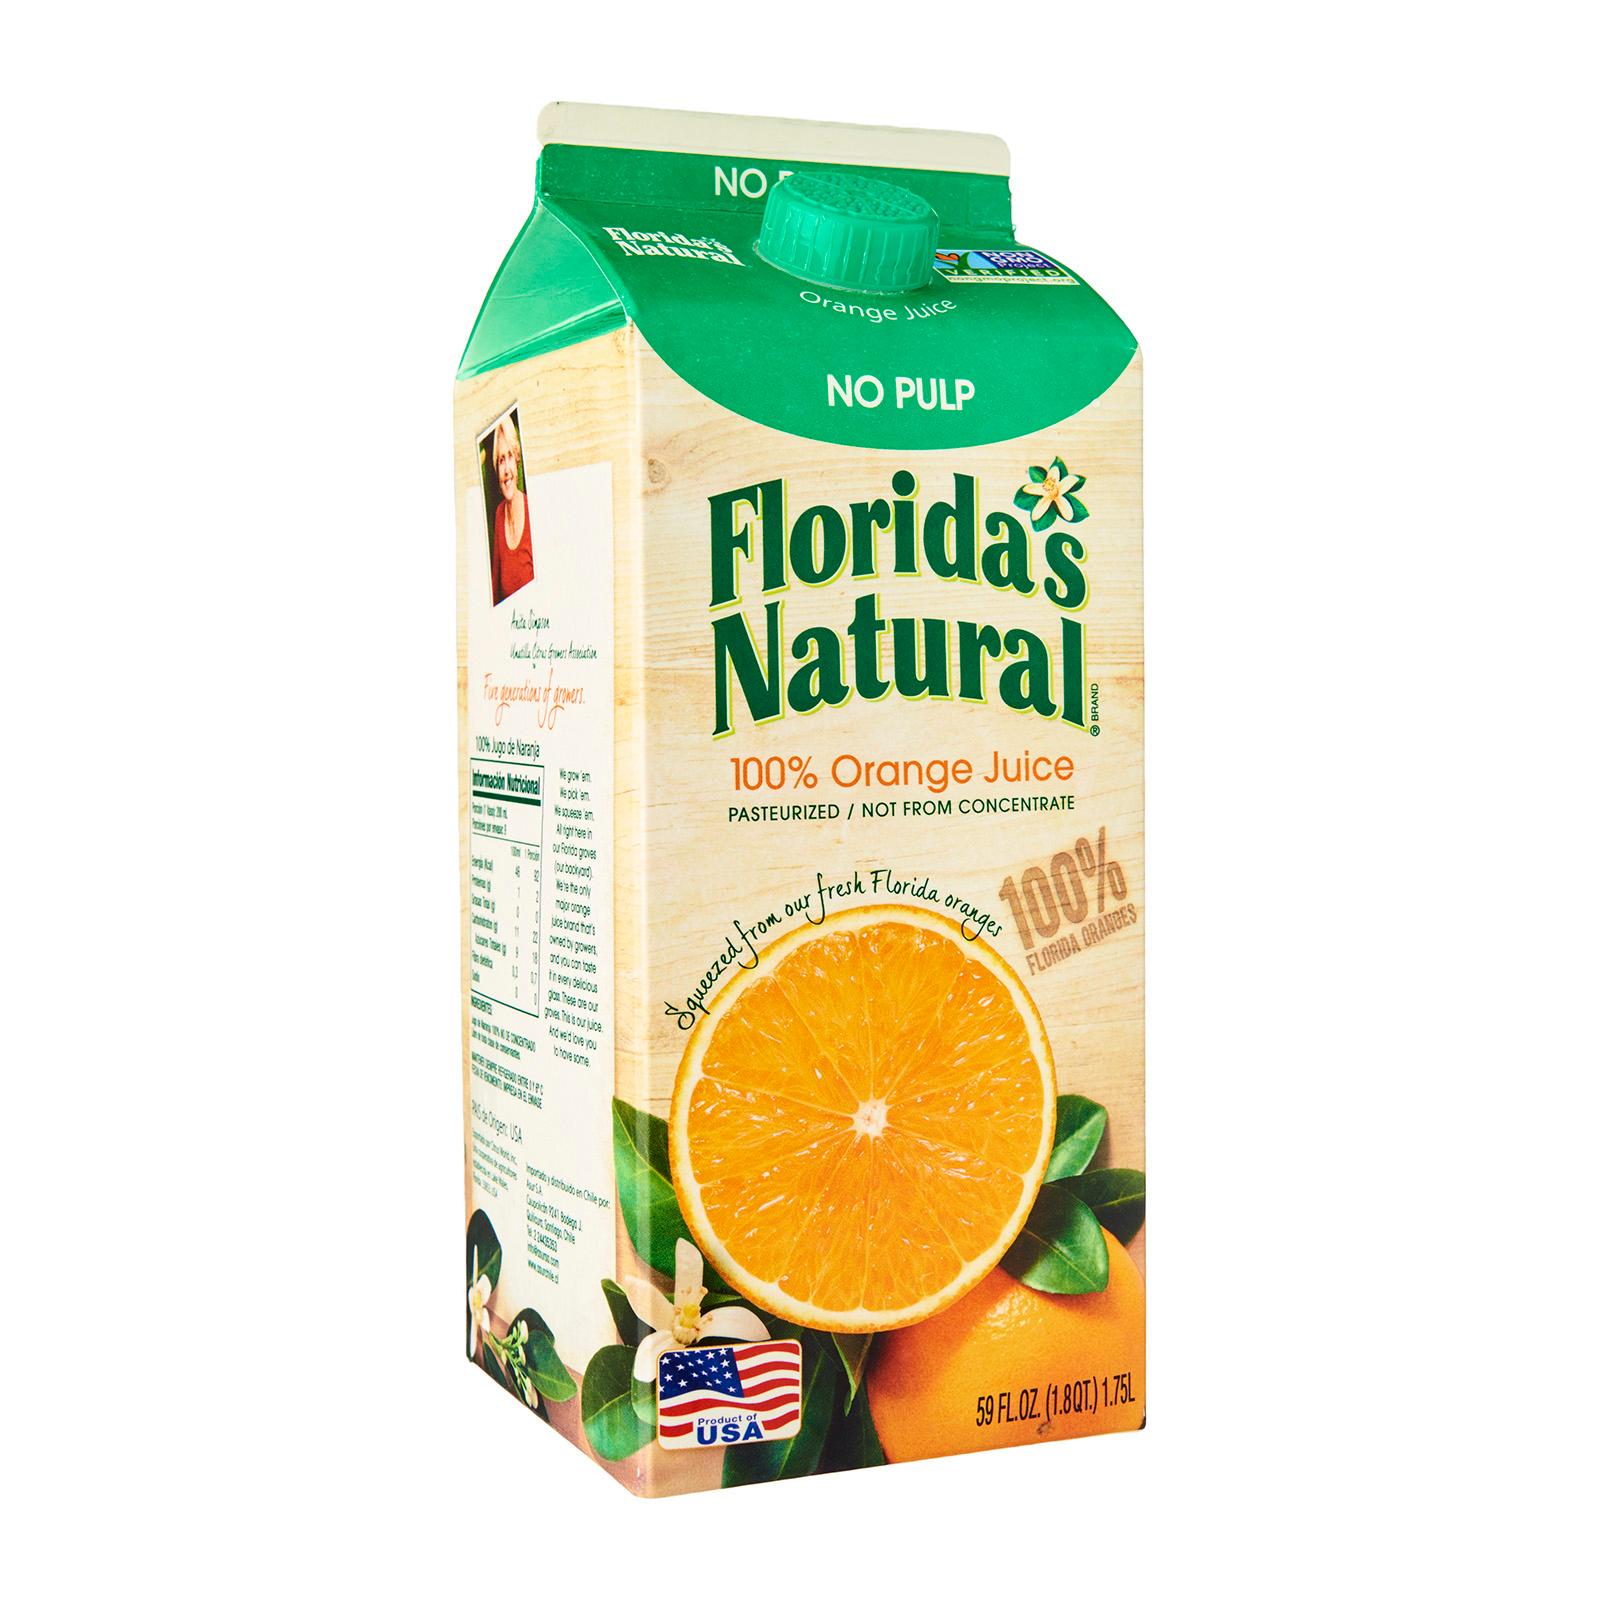 Florida's Natural Orange Juice - No Pulp 0 - from RedMart